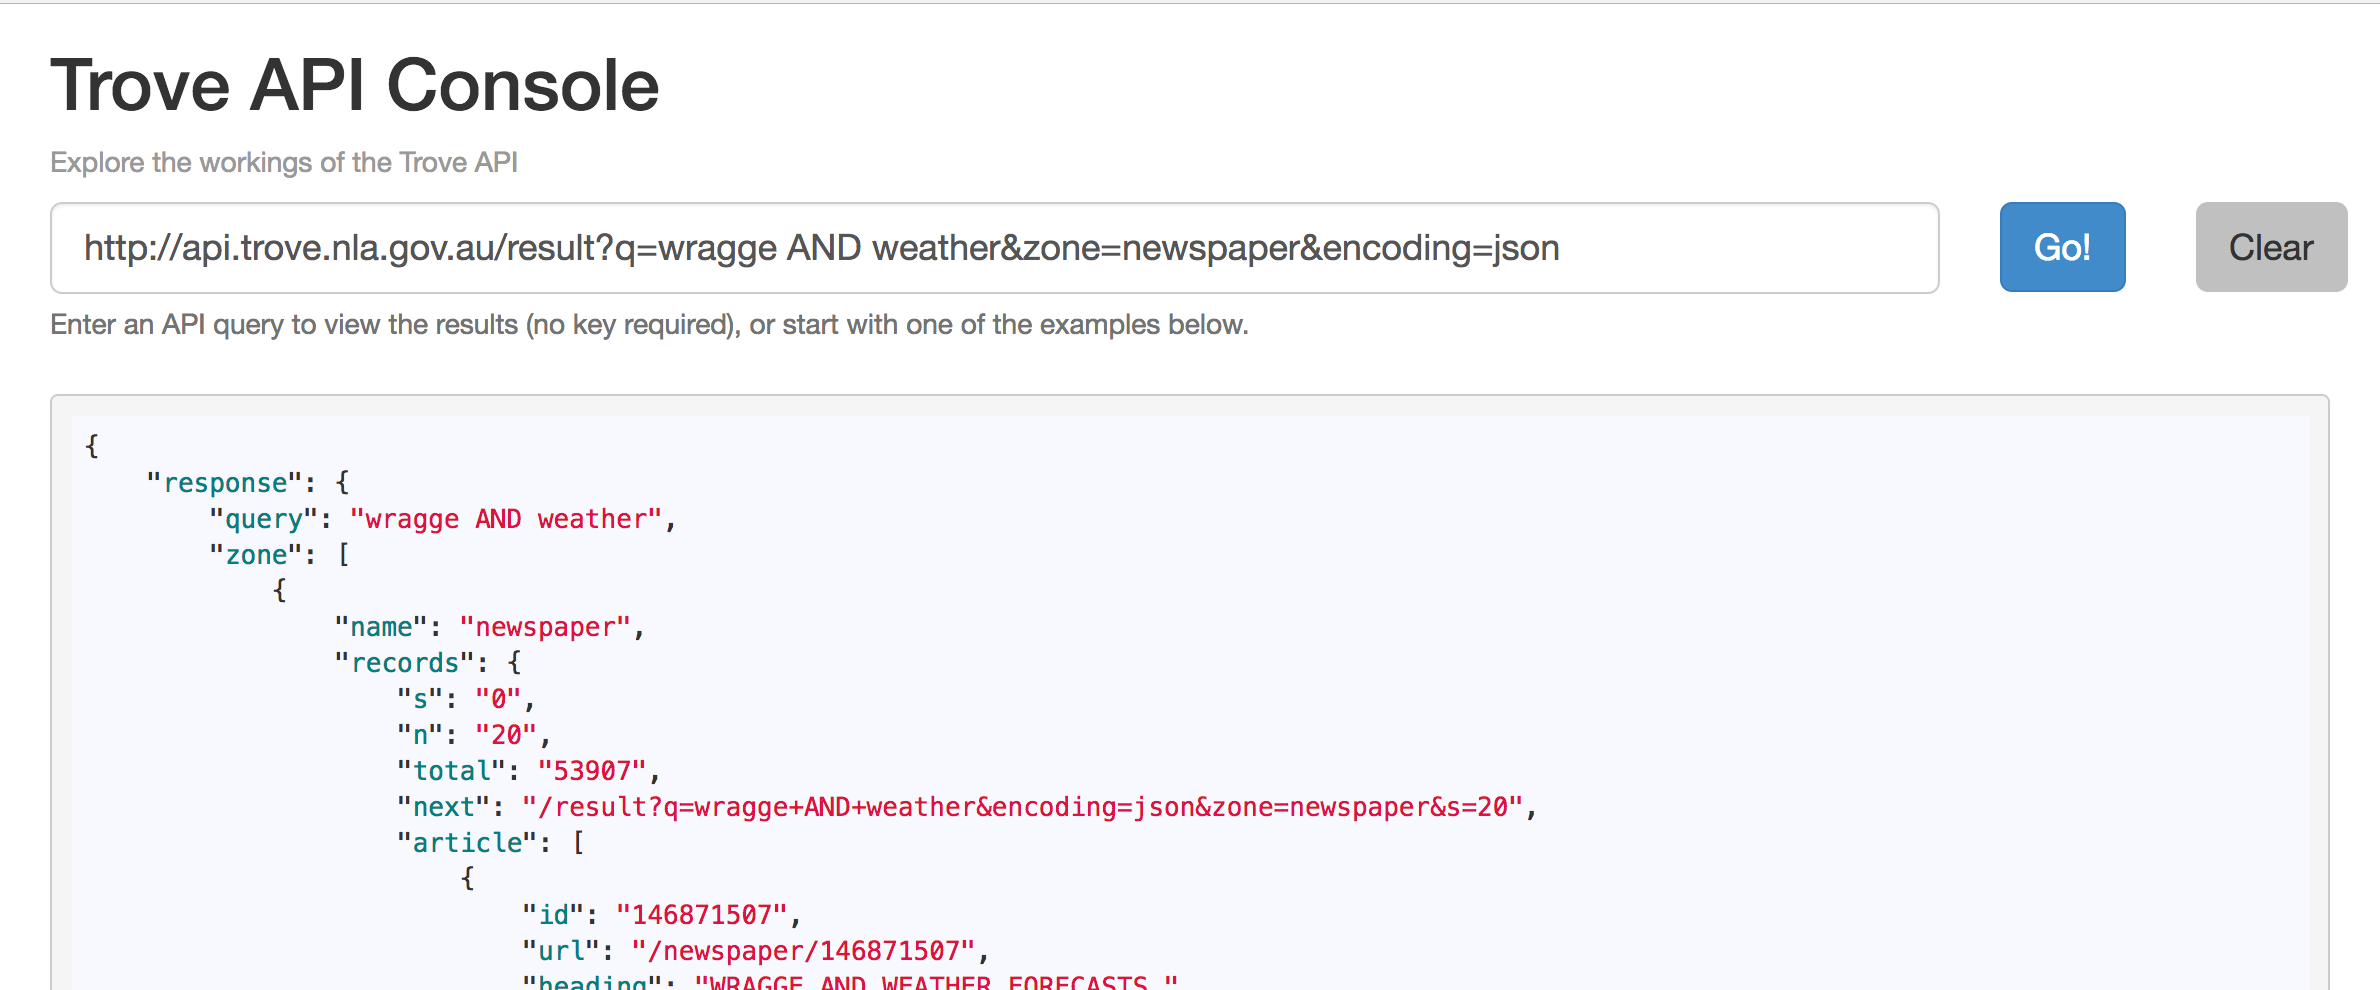 Screenshot of the Trove API Console